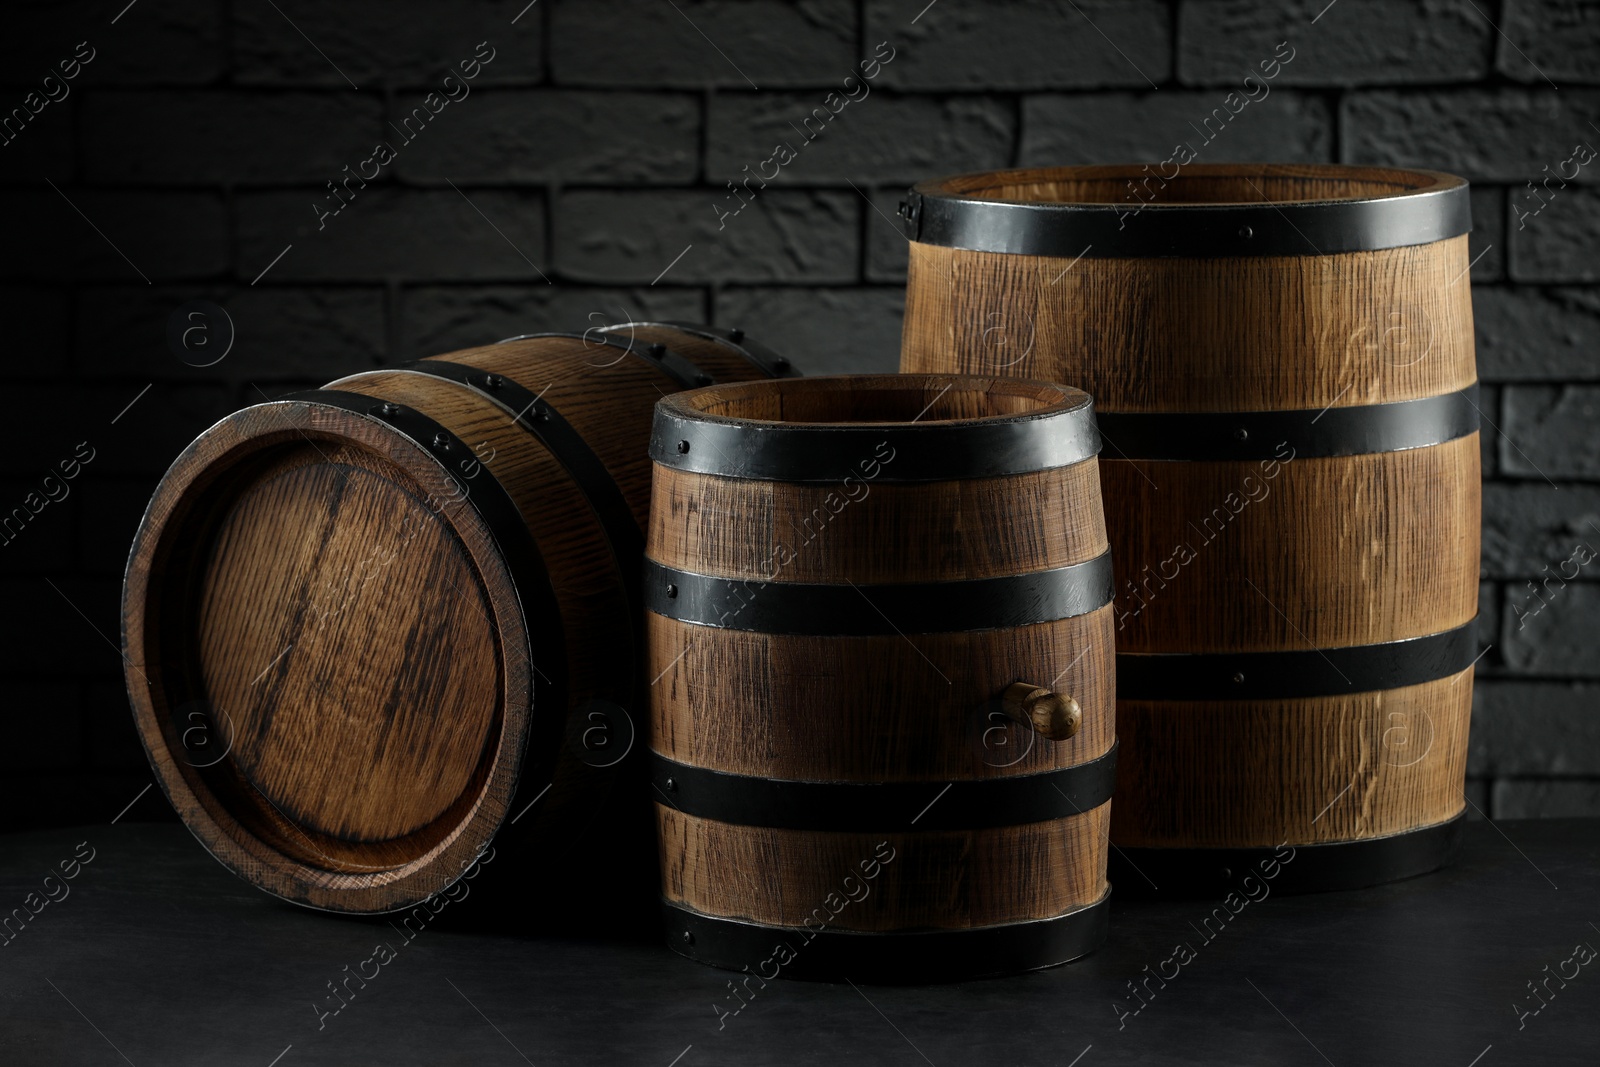 Photo of Wooden barrels on table near brick wall, closeup